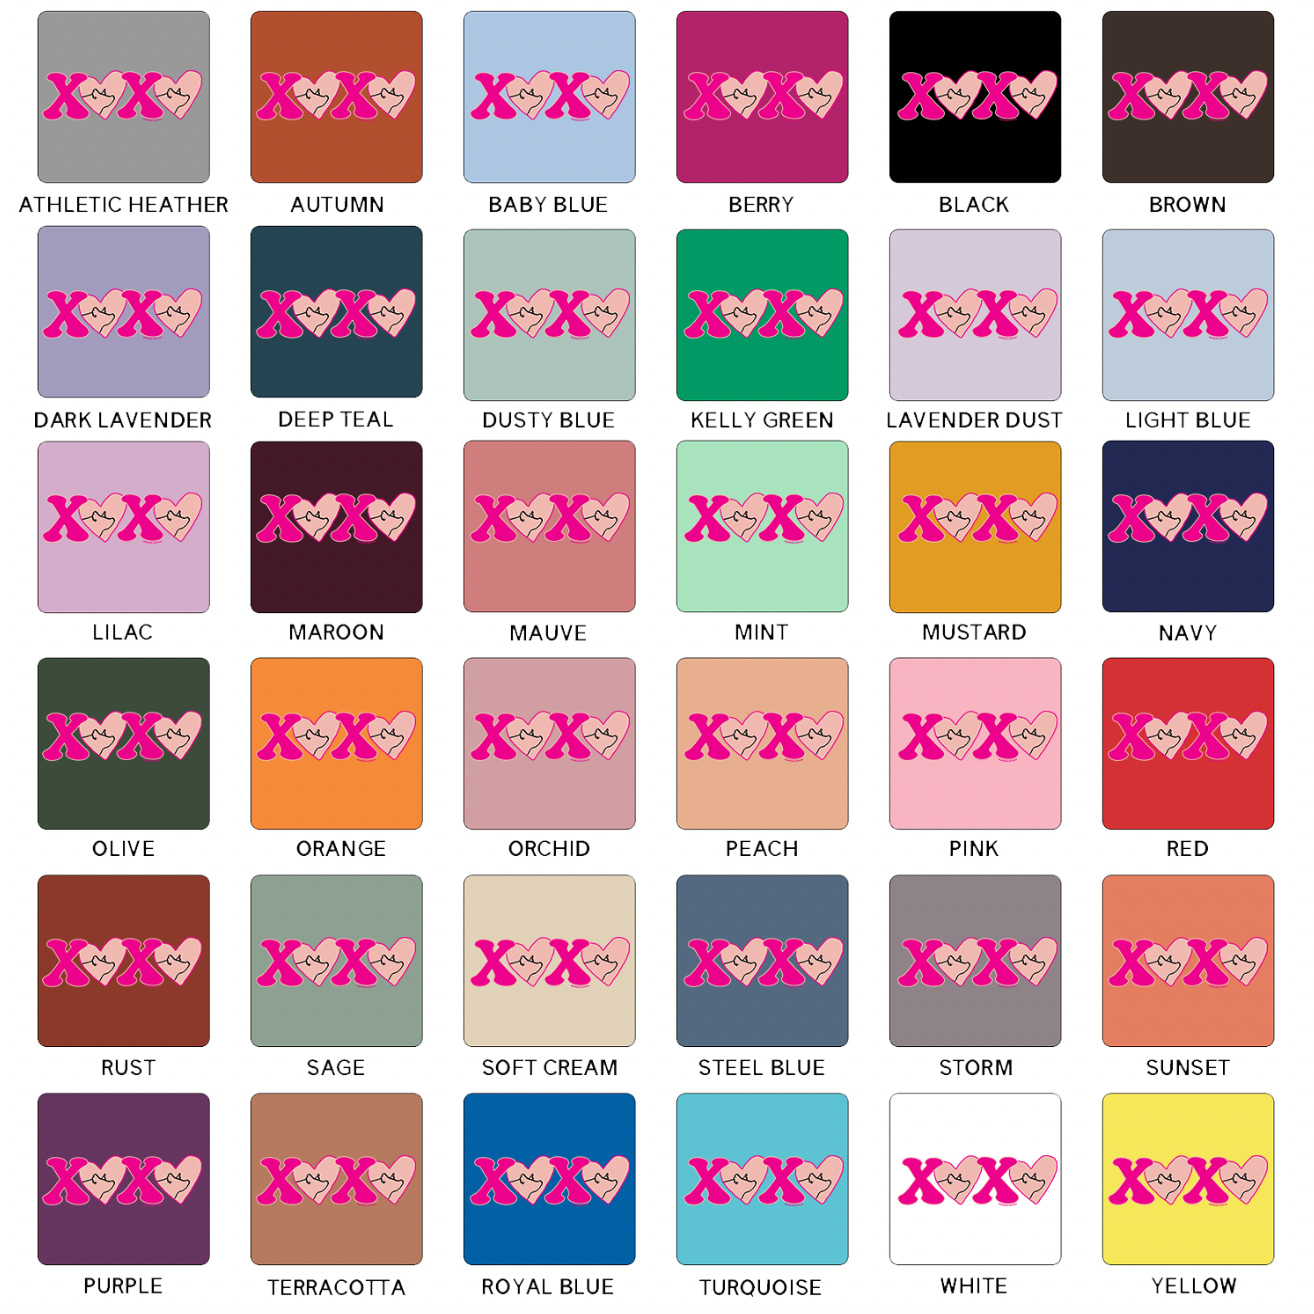 XOXO Pig T-Shirt (XS-4XL) - Multiple Colors!